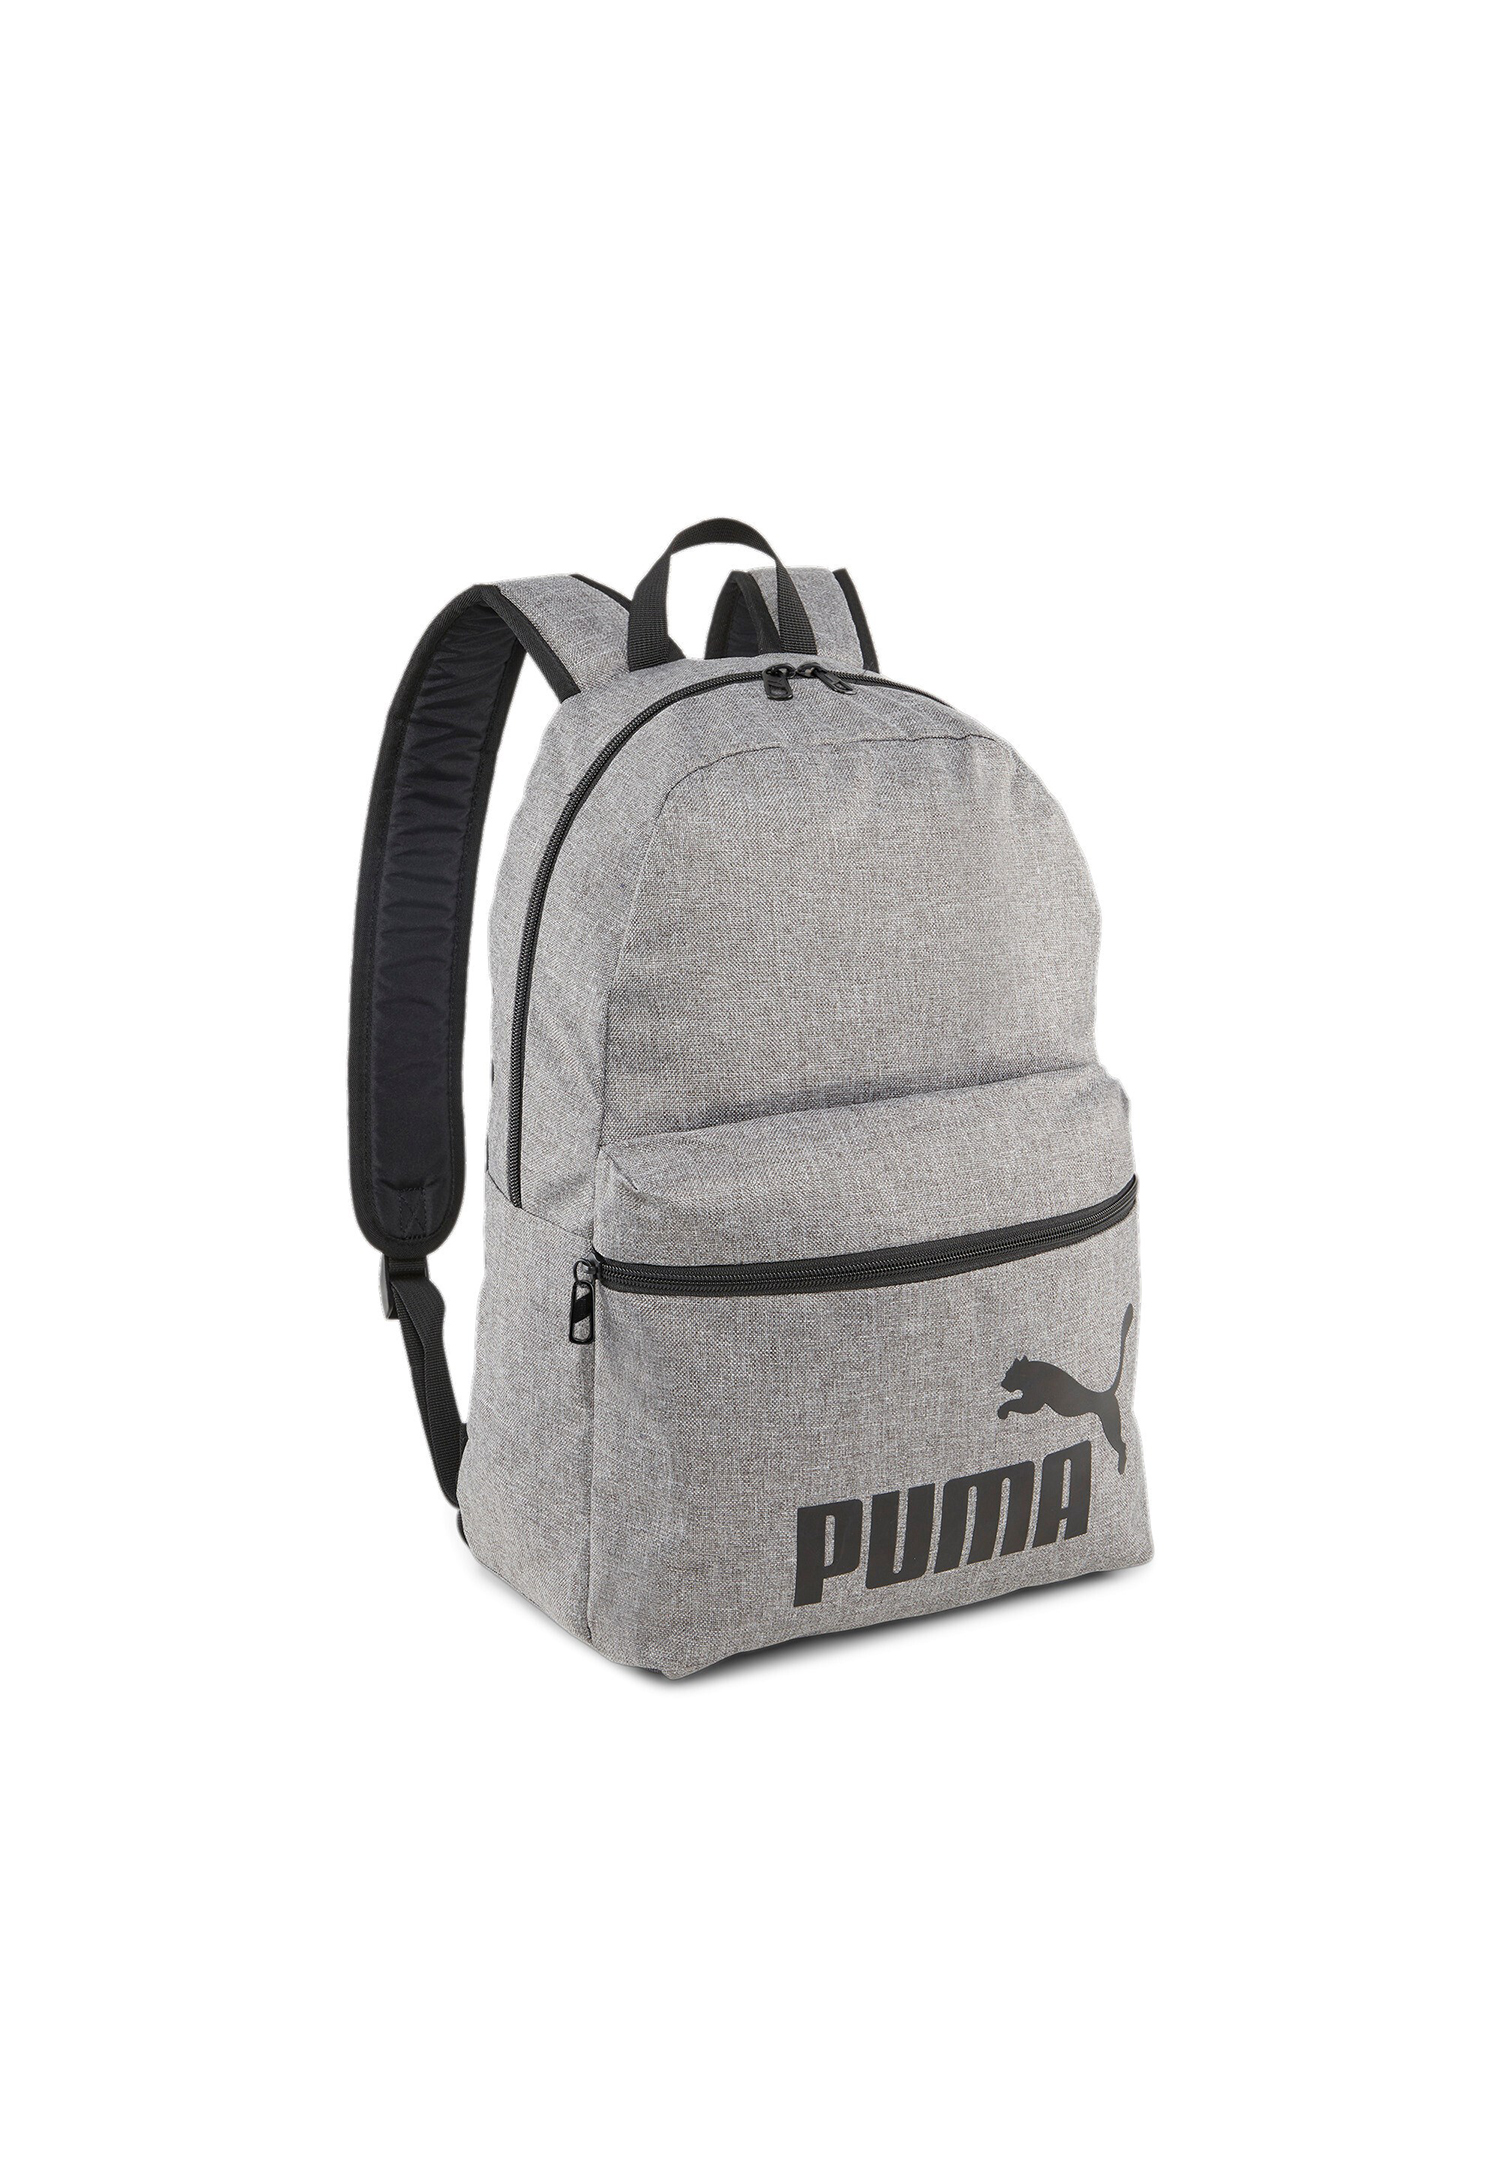 PUMA Phase Backpack III Rucksack Sport Freizeit Reise Schule 090118 01 grau